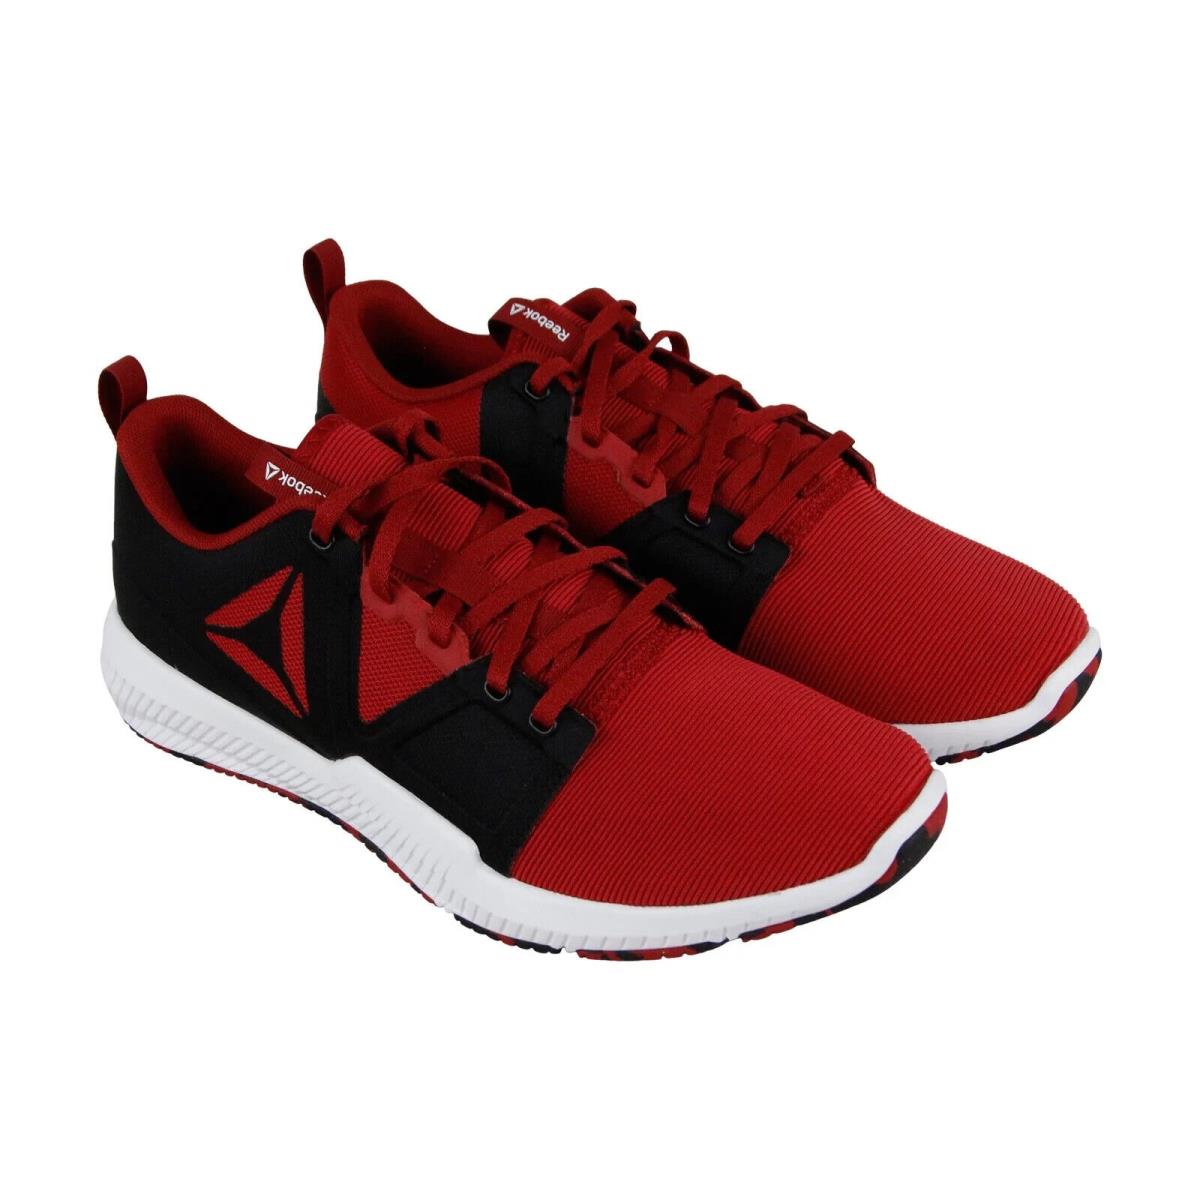 Reebok Hydrorush CN4028 Men`s Red Black Low Top Training Shoes Size US 11 RBK36 - Red Black